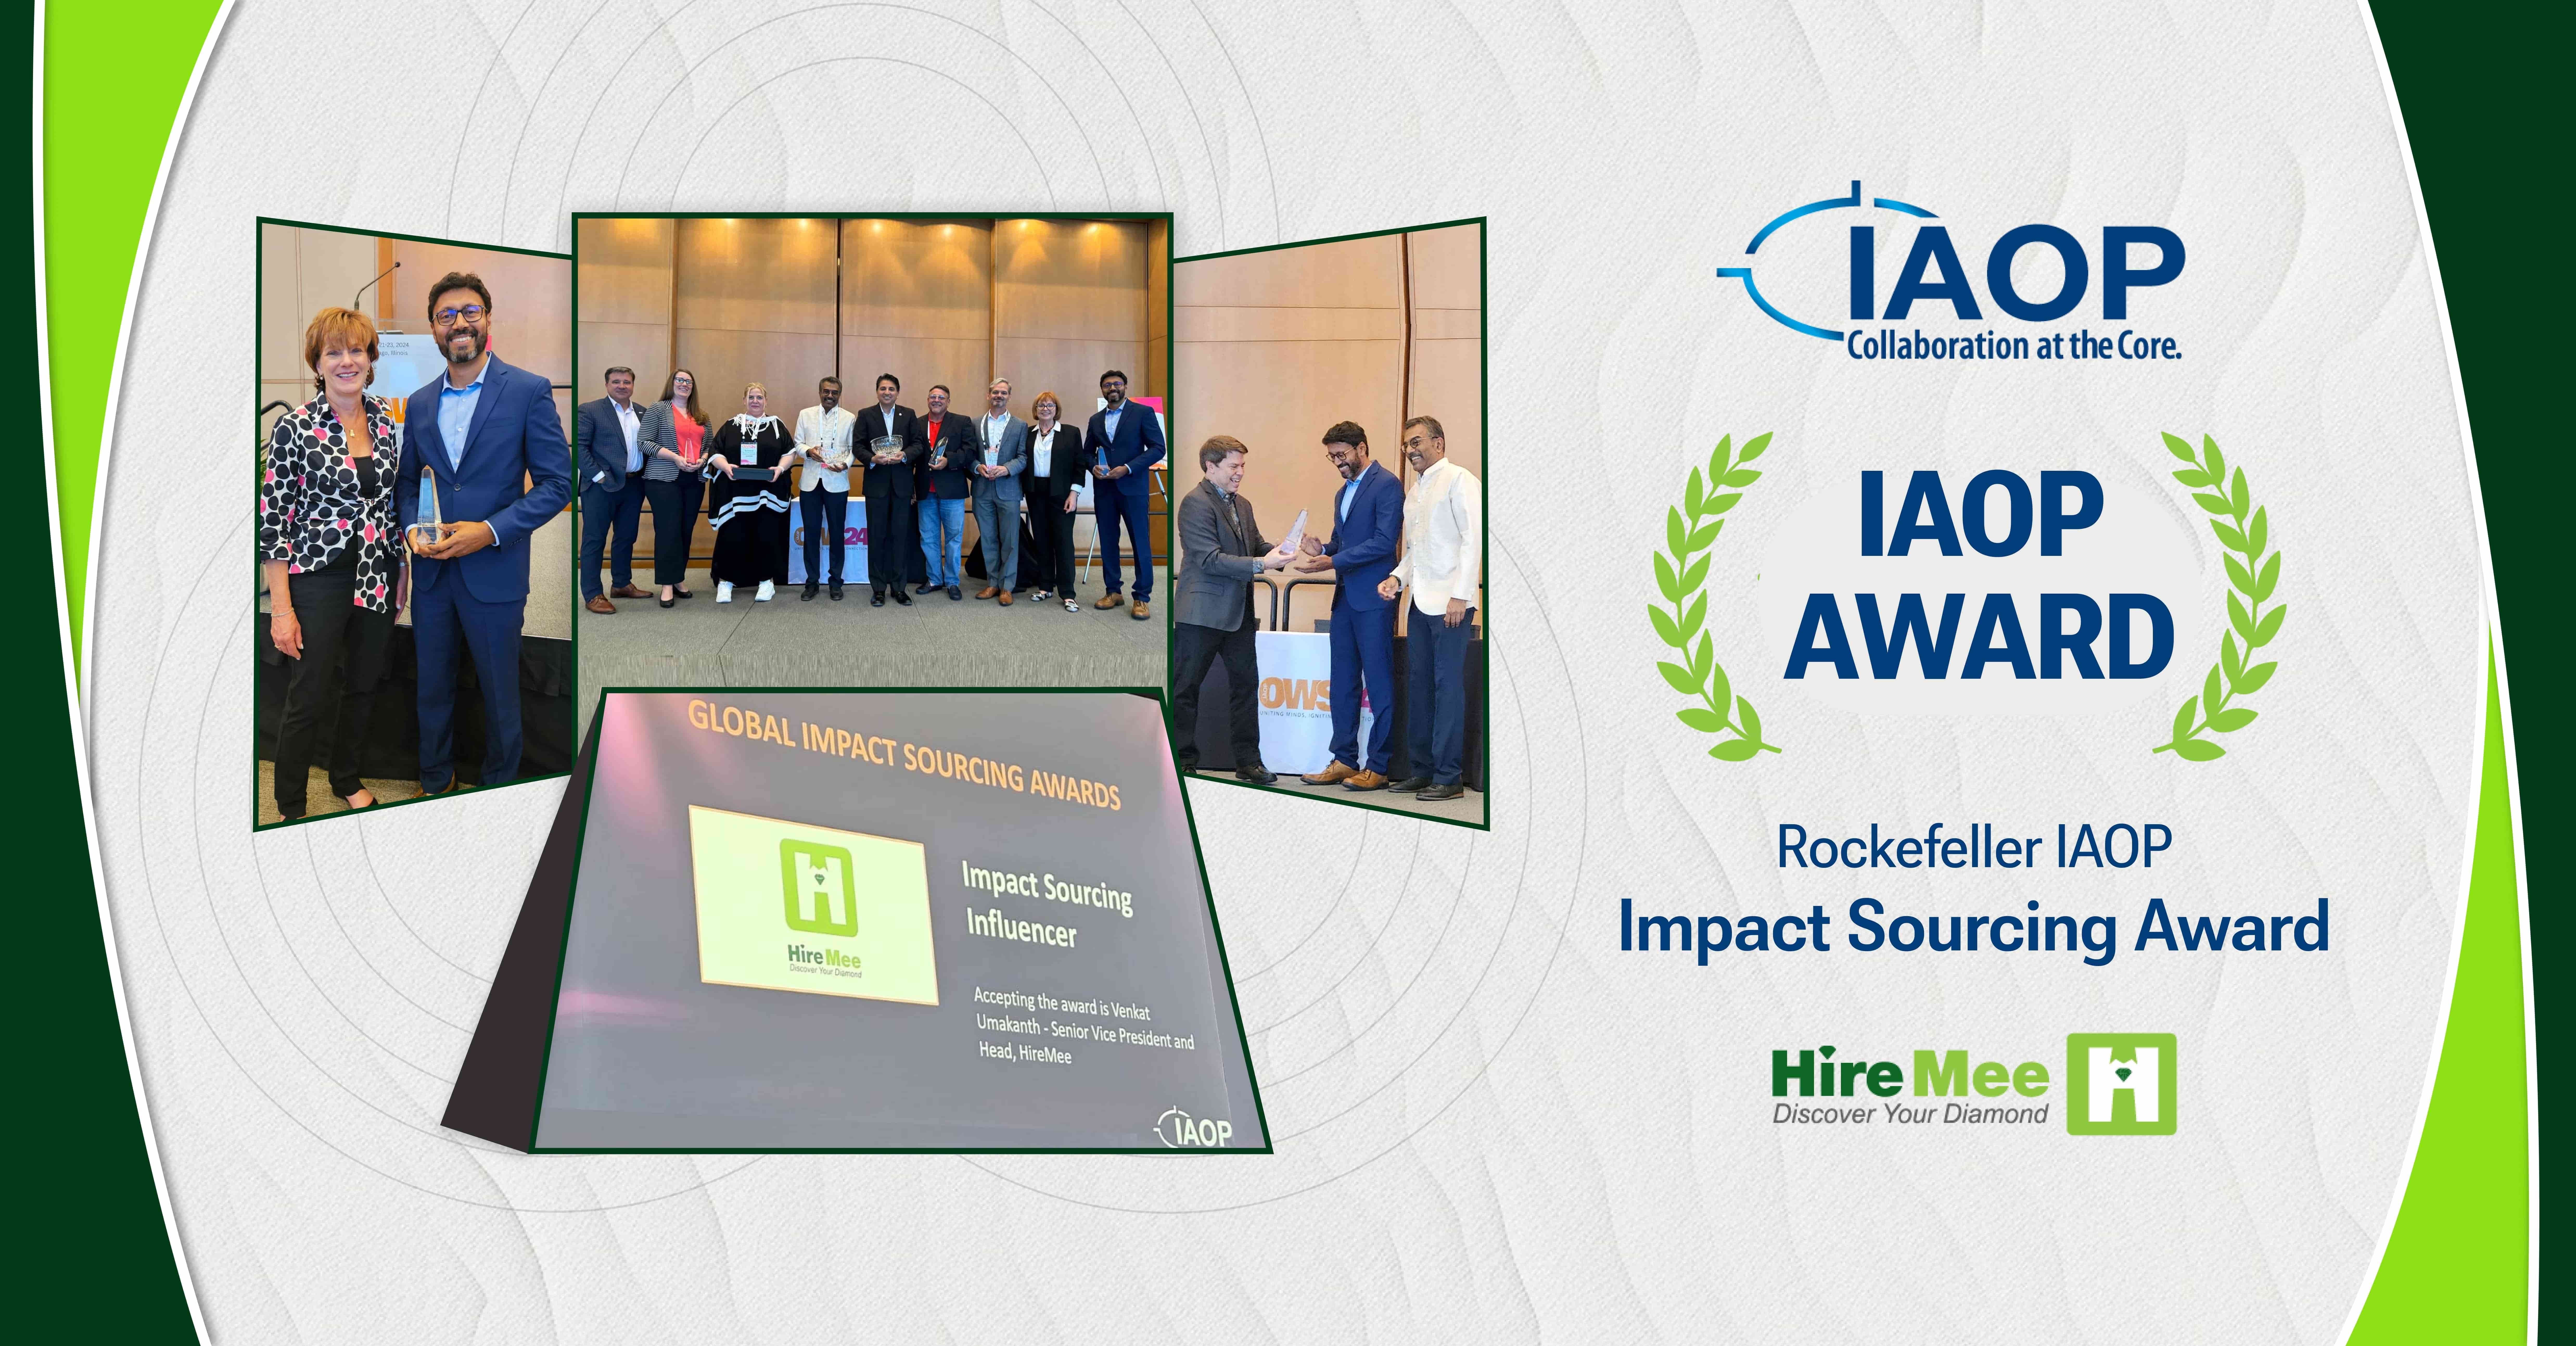 IAOP Award- Rockefeller IAOP Impact Sourcing Award